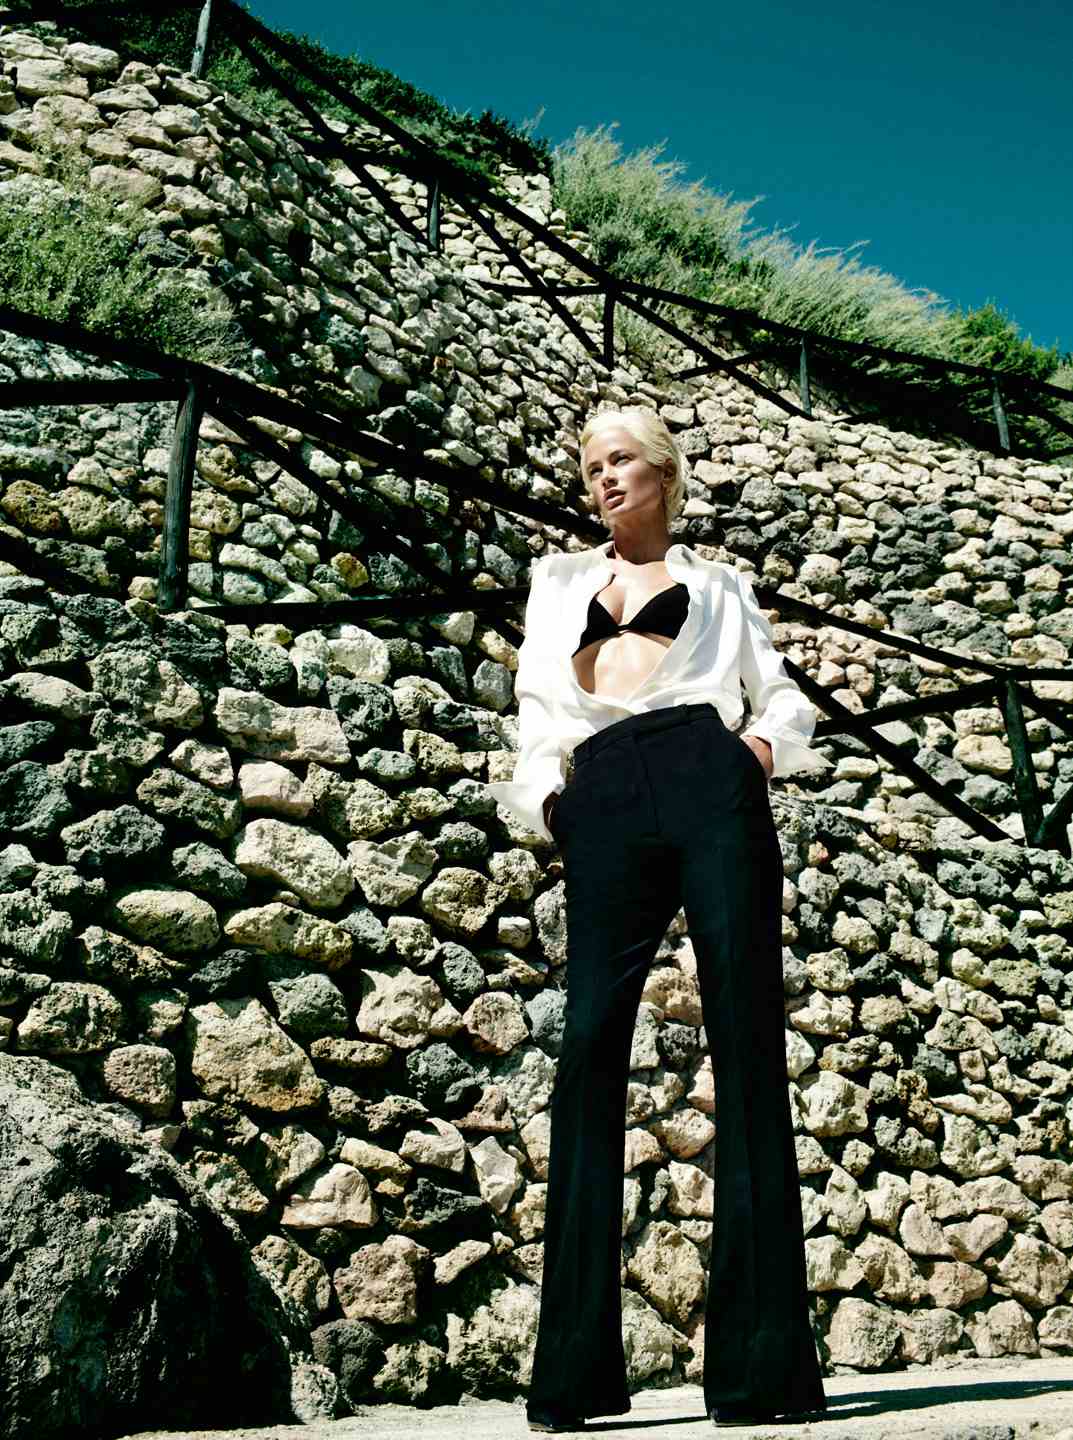 VOGUE USA - 2012
Photographer: Mario Testino
Model: Carolyn Murphy - Matthias Schoenaerts
Stylist: Tonne Goodman
Location: Porto Ercole - Italy